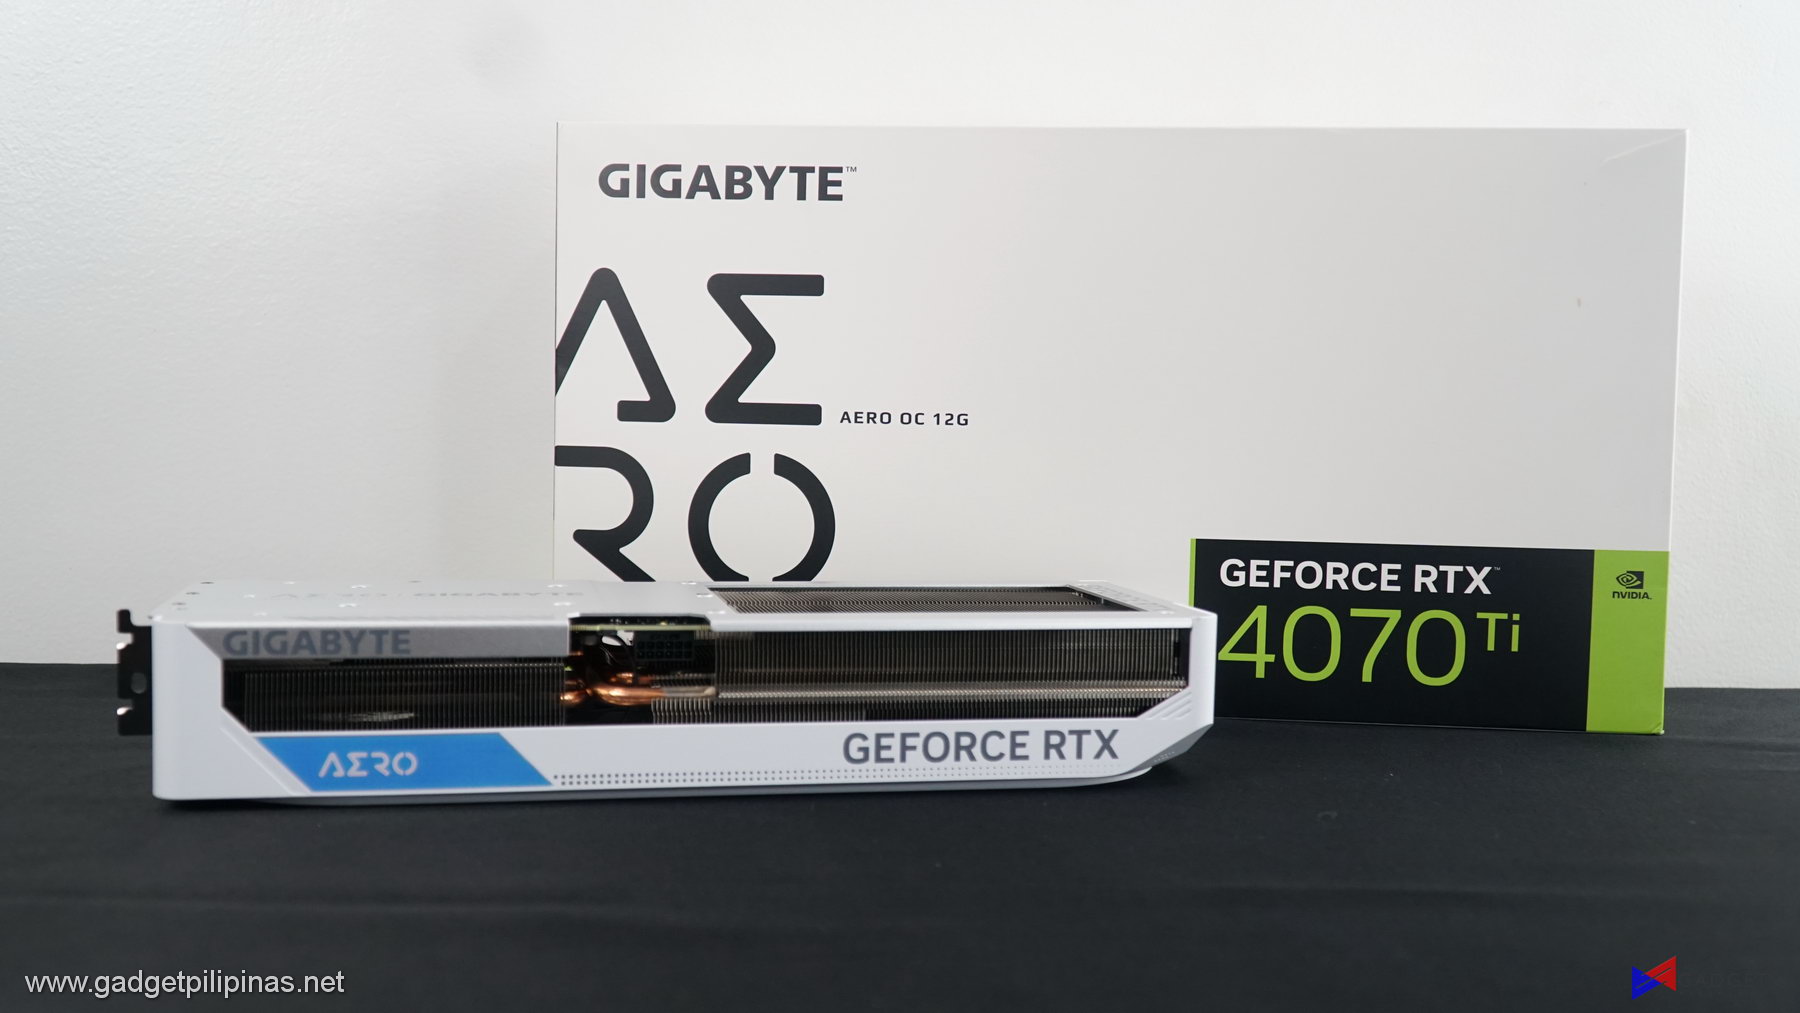 Gigabyte RTX 4070 Ti AERO OC 12G Graphics Card Review – The Mainstream RTX 40 GPU